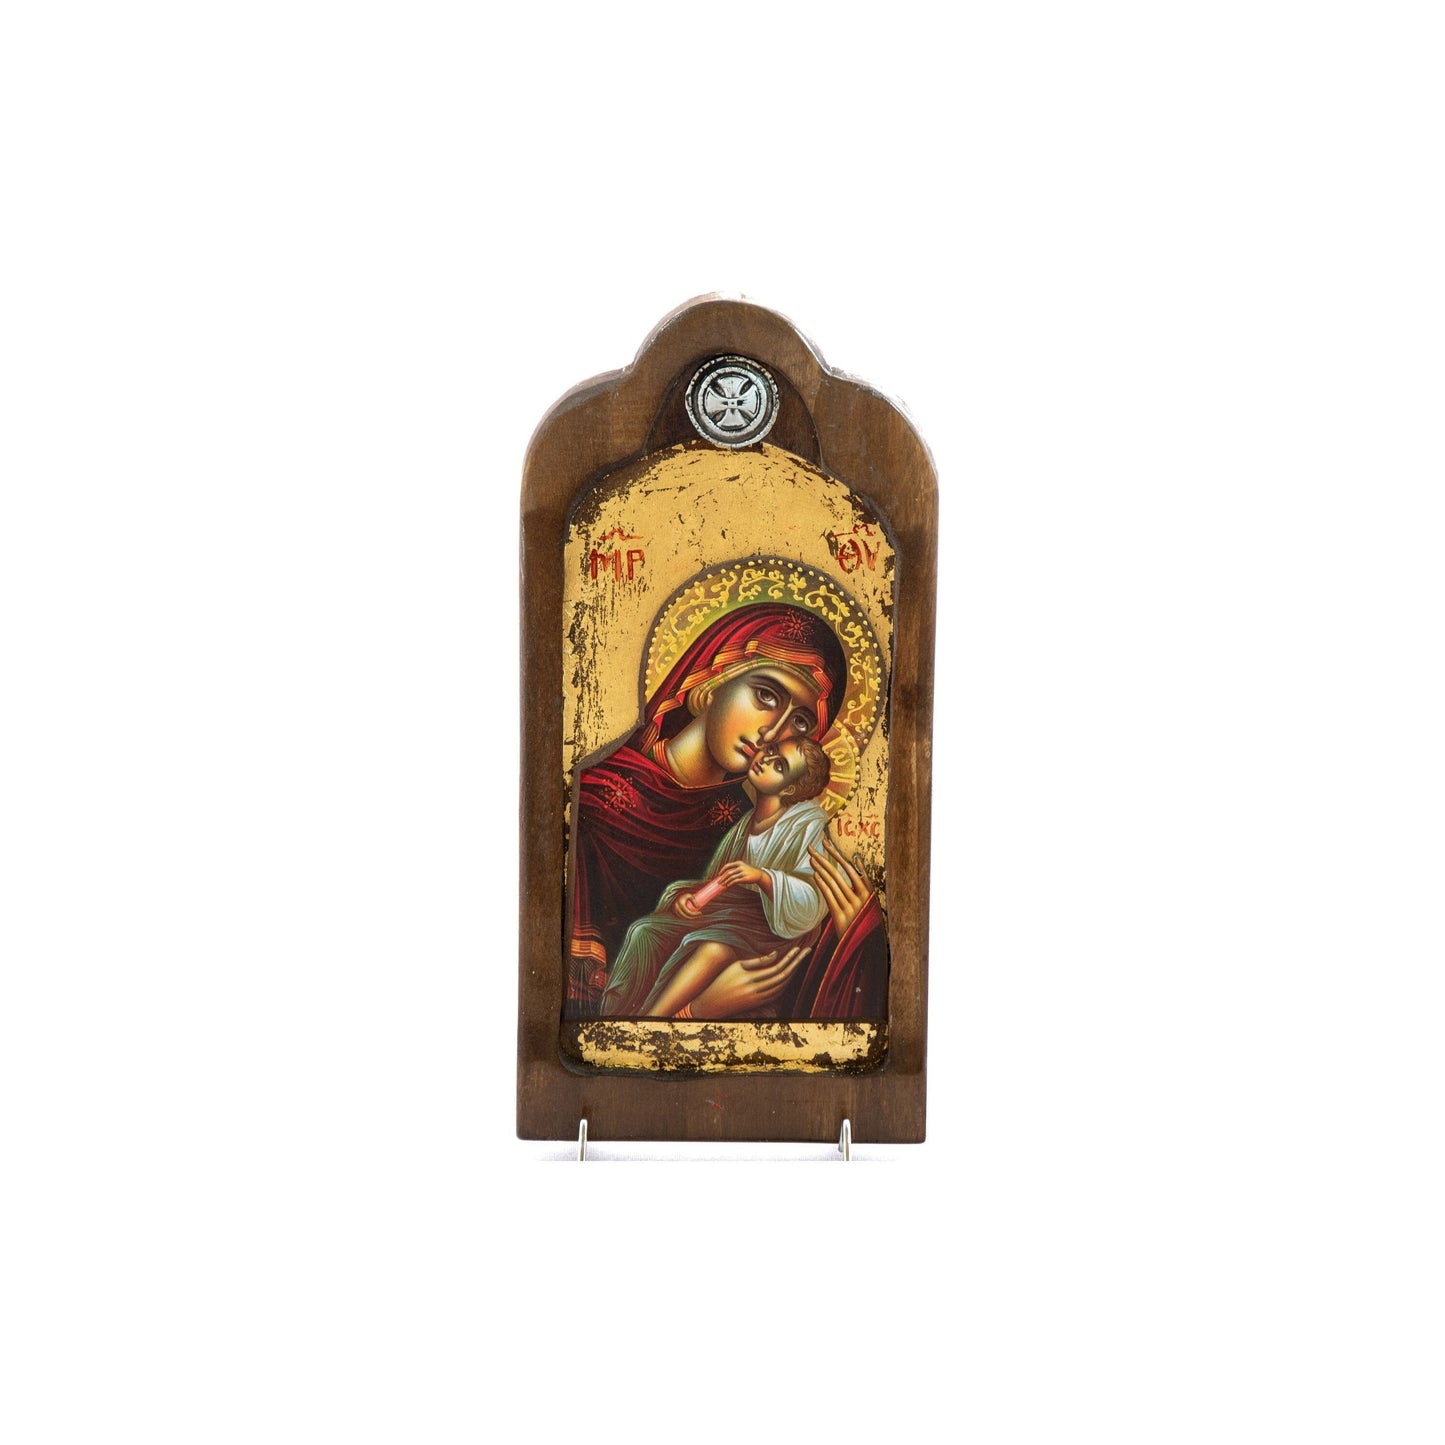 Virgin Mary icon Panagia, Handmade Greek Orthodox icon of Theotokos, Mother of God Byzantine art wall hanging plaque, wedding gift 37x18cm TheHolyArt